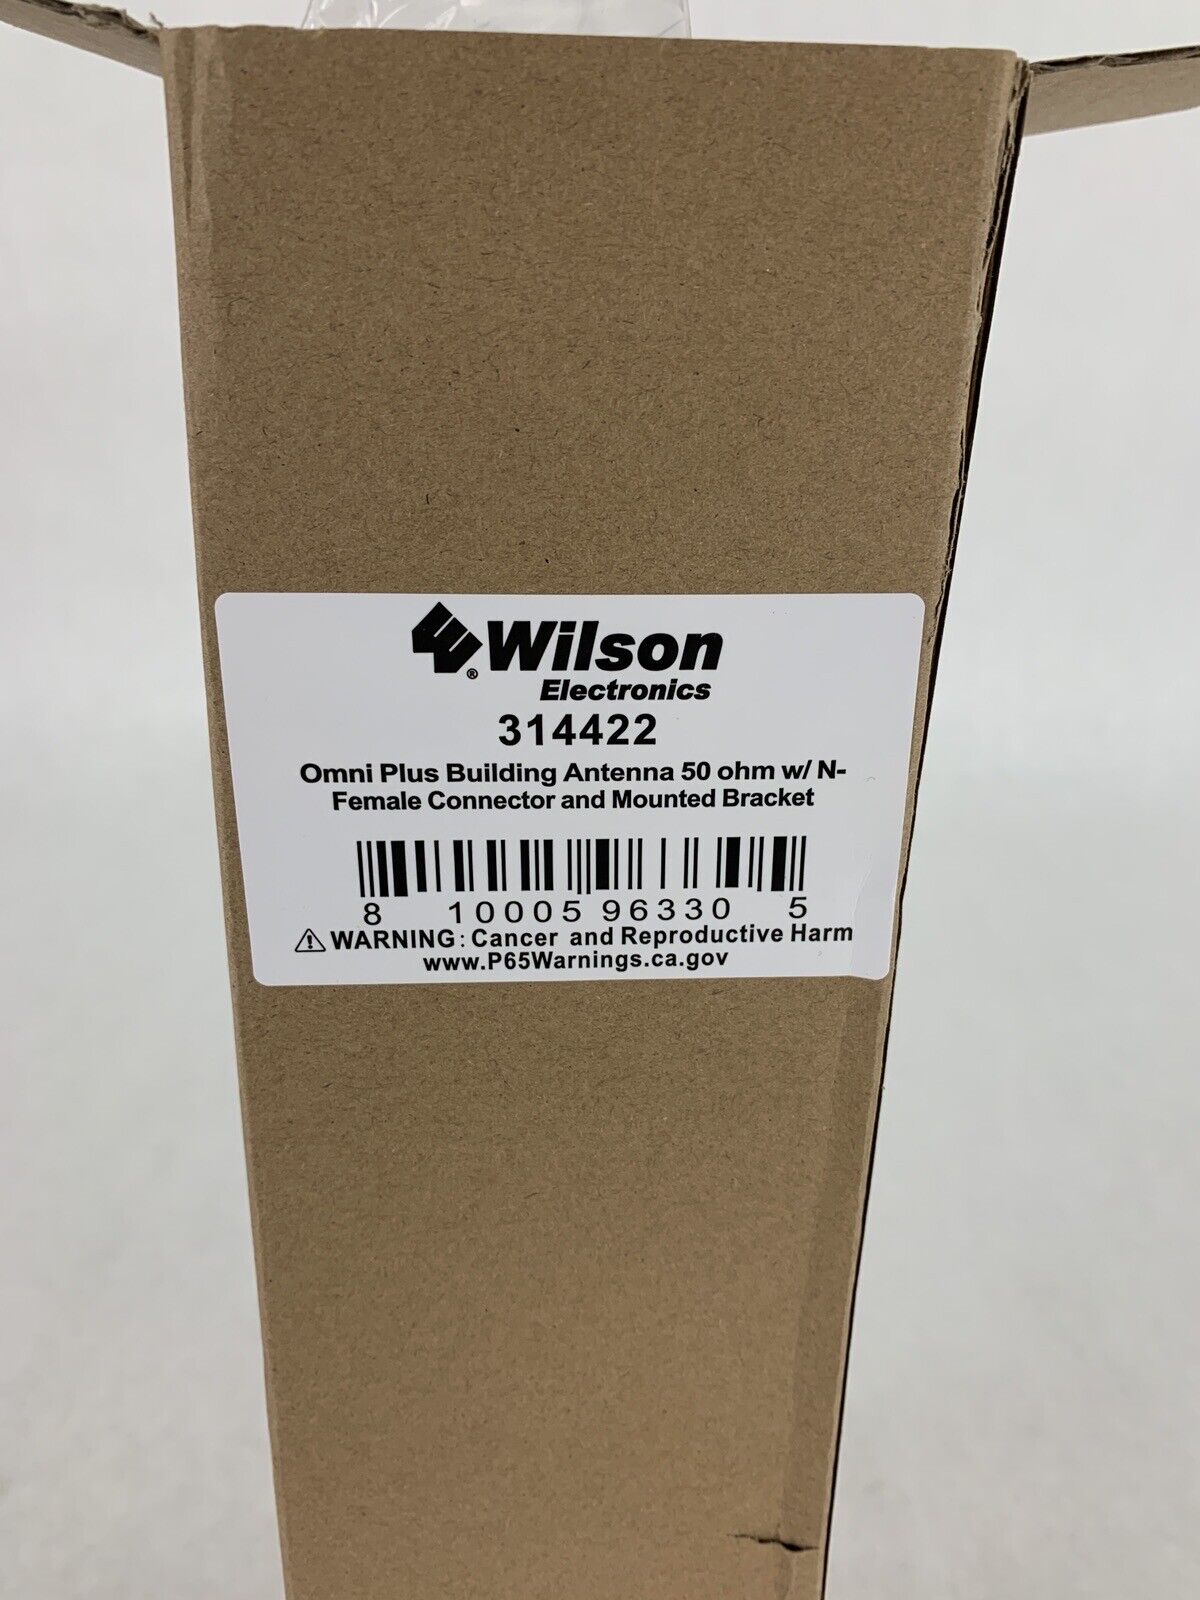 Box Opened Wilson Electronics Omni Plus Building Antenna 314422 50 ohm N Female